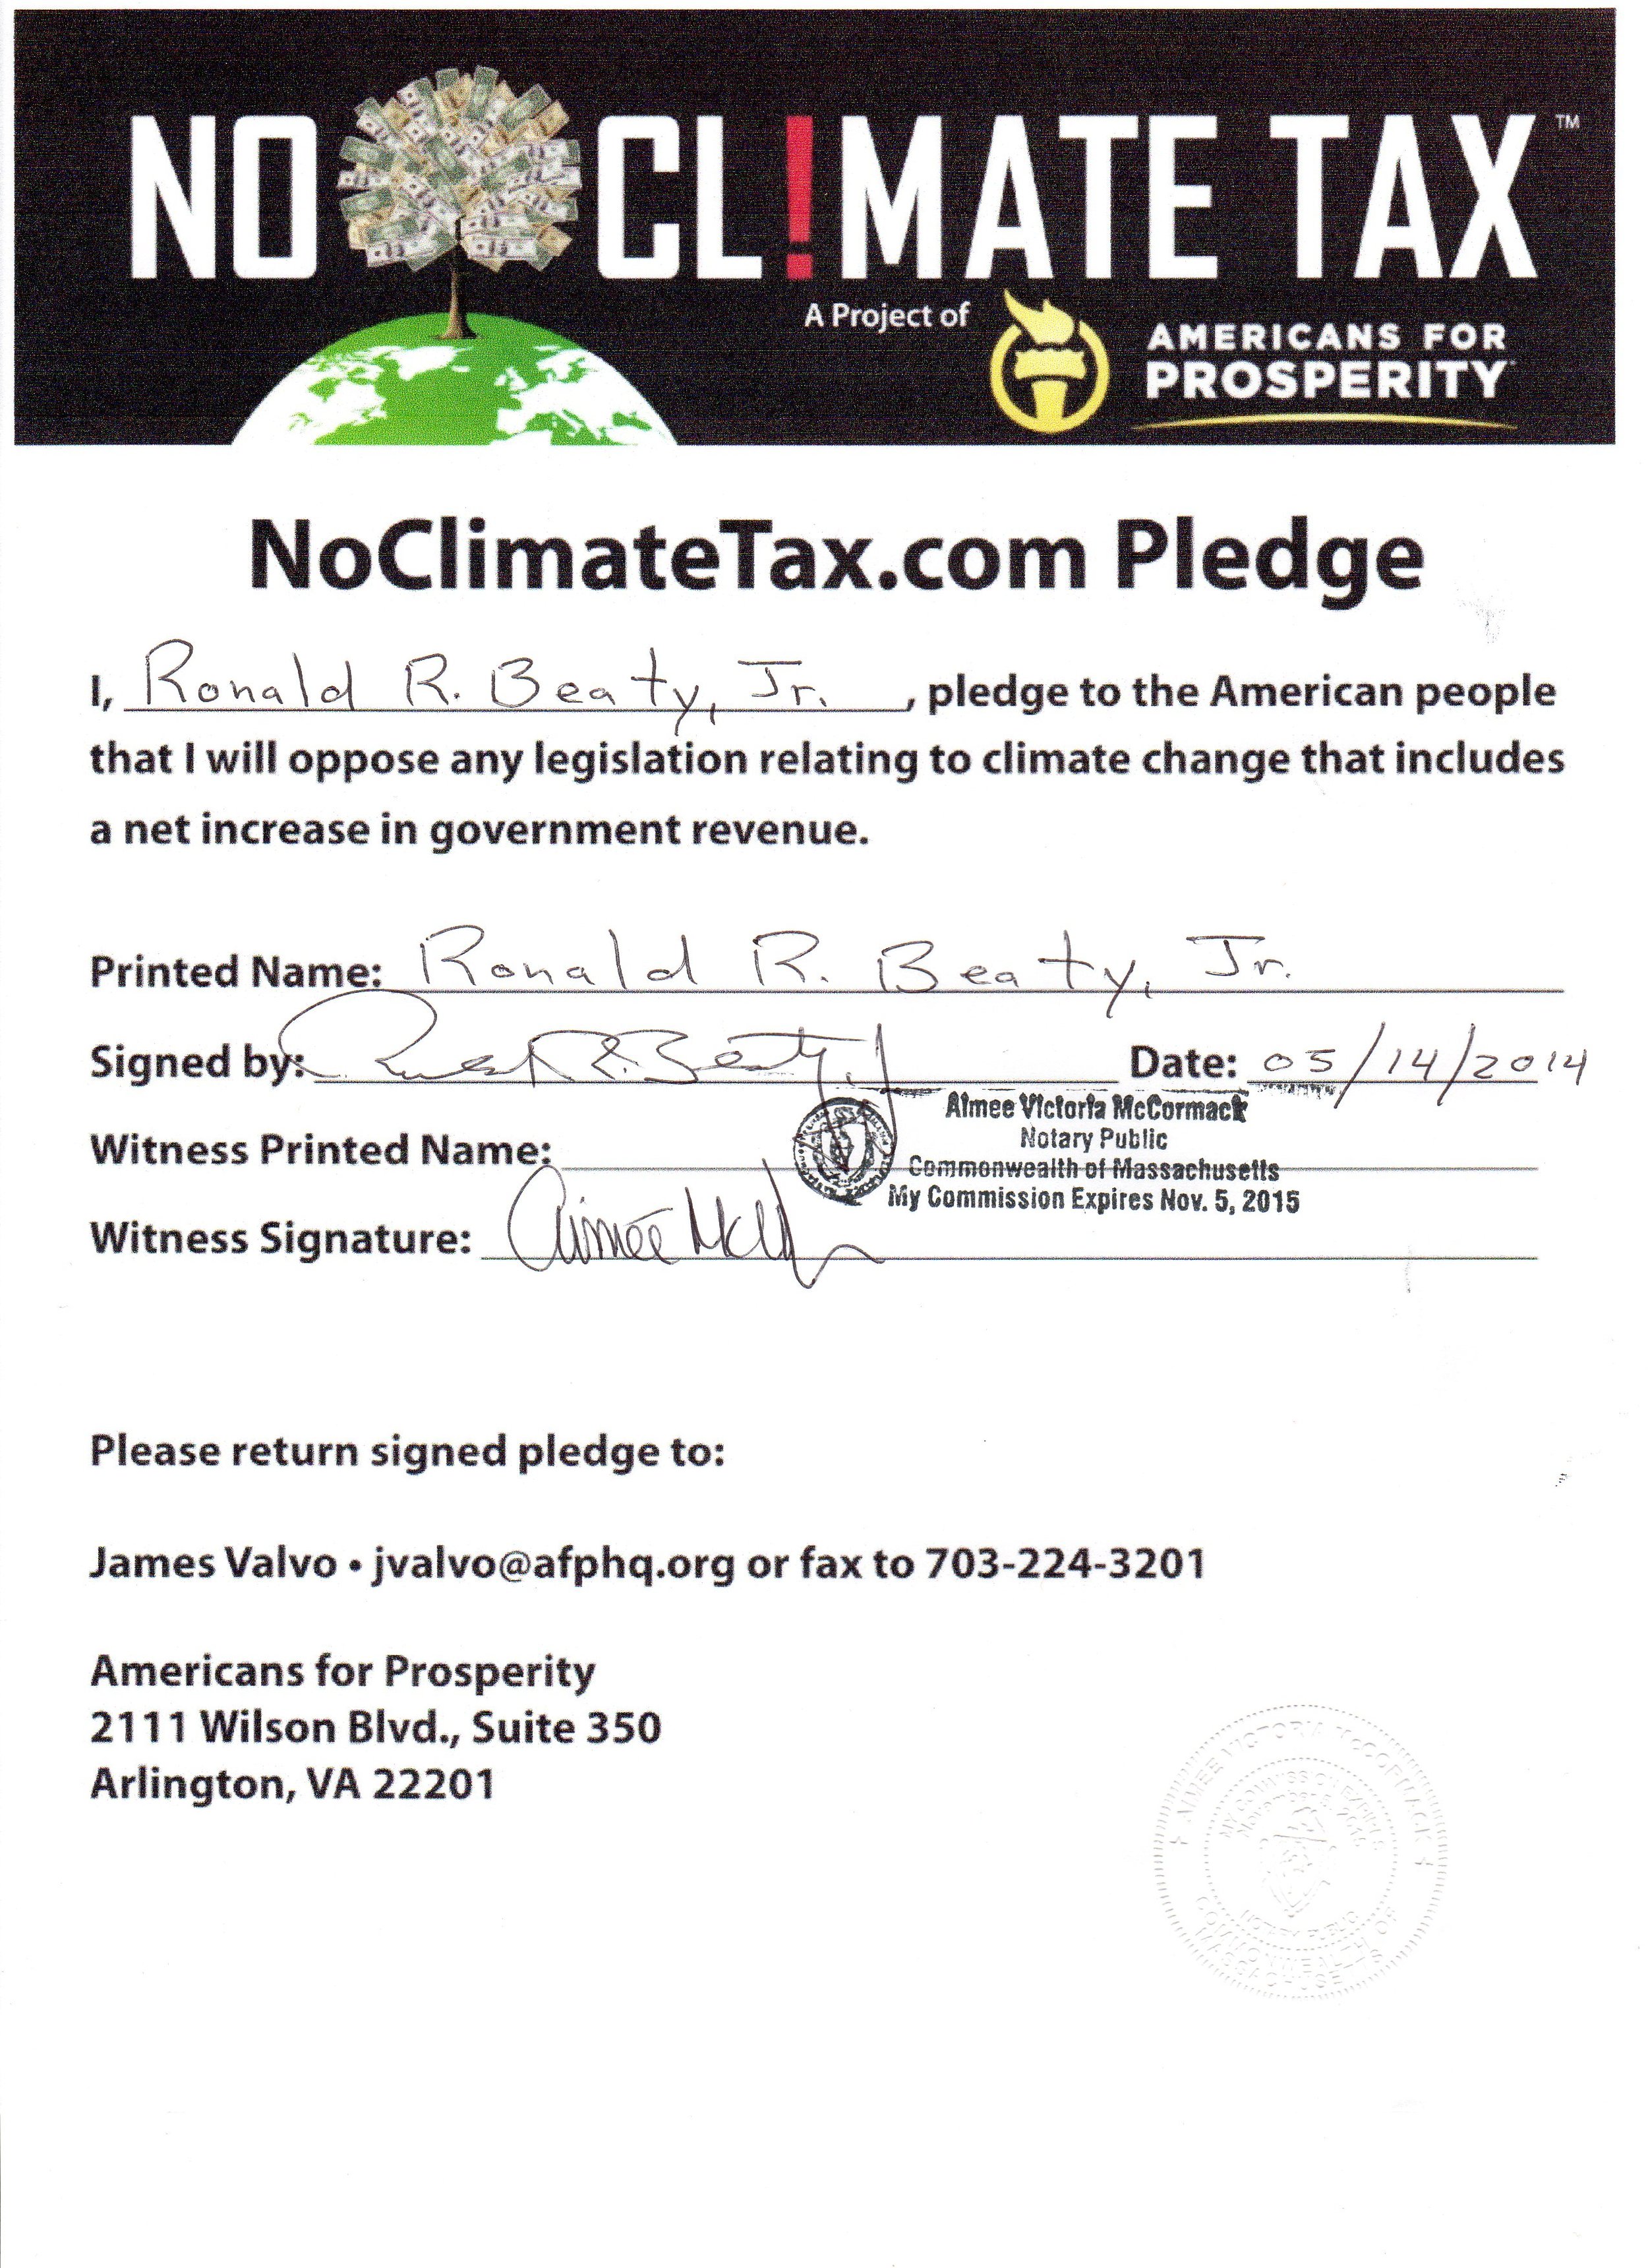 ron-beaty-no-climate-tax-pledge1.jpg